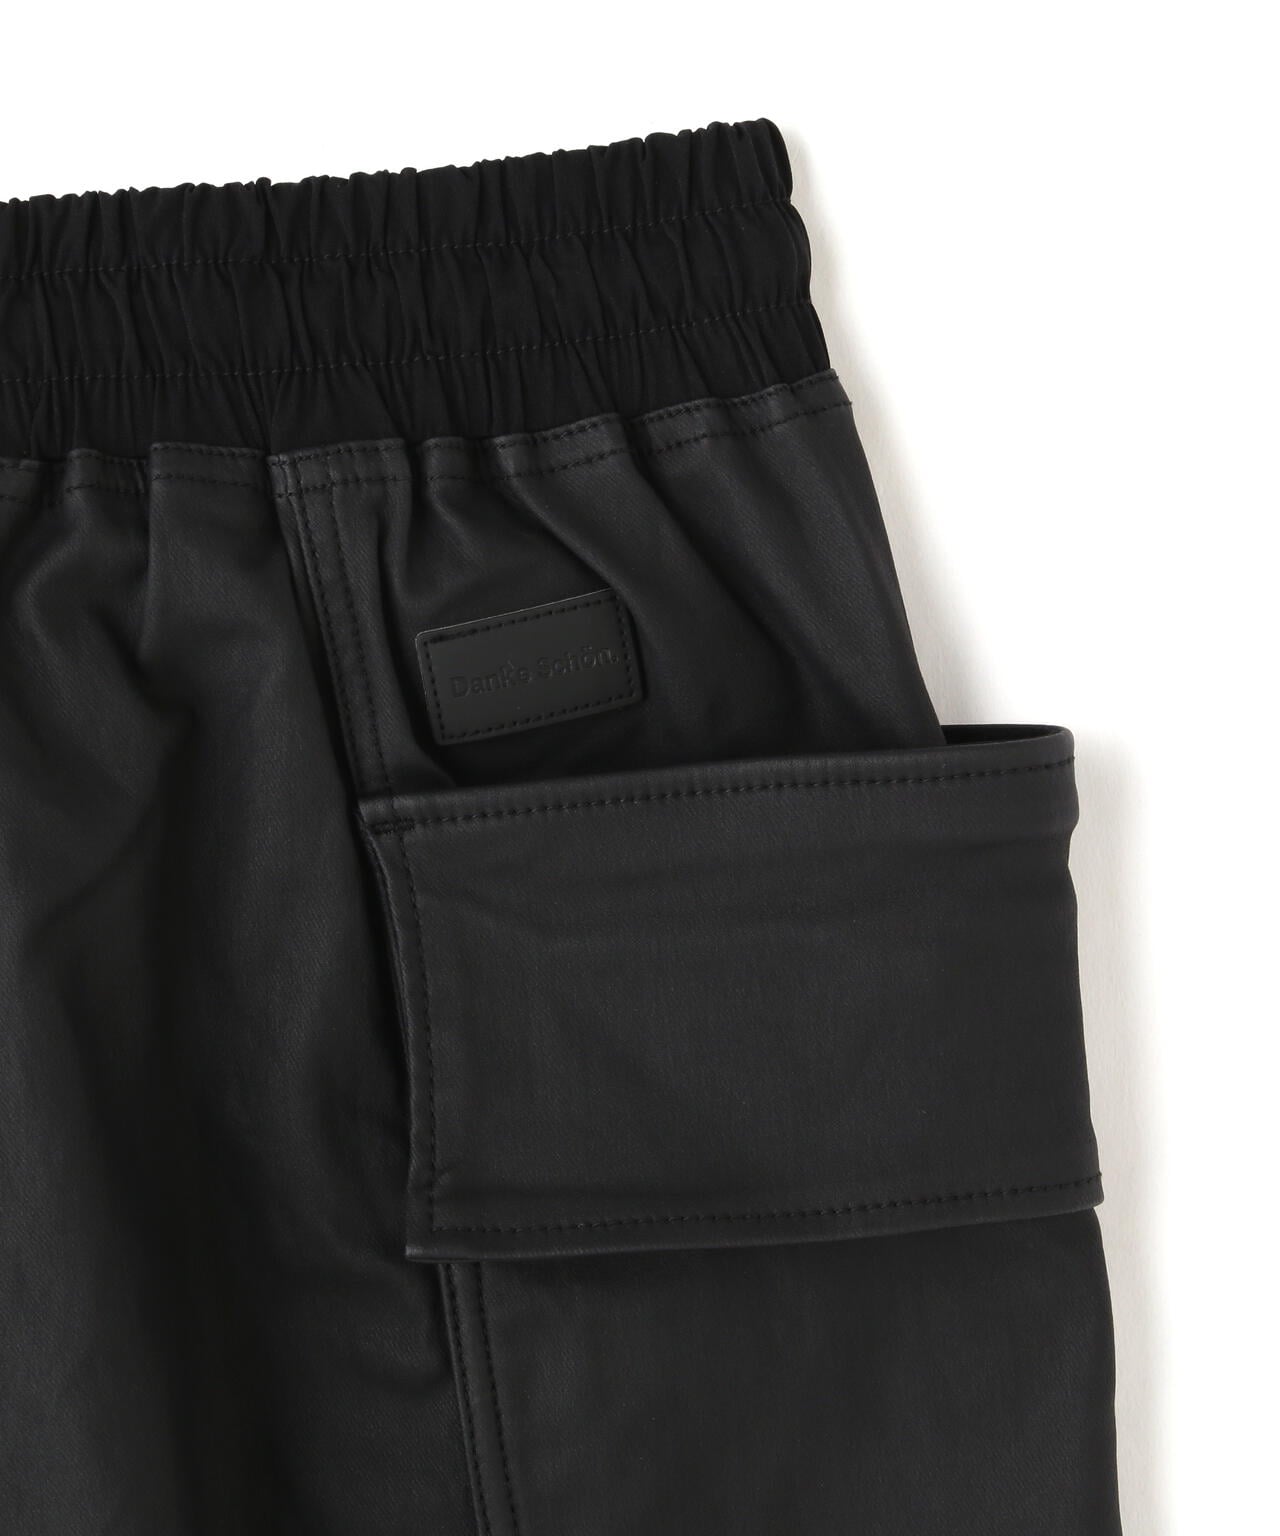 DankeSchon/ダンケシェーン/COATED SARROULE PANTS 割引き パンツ